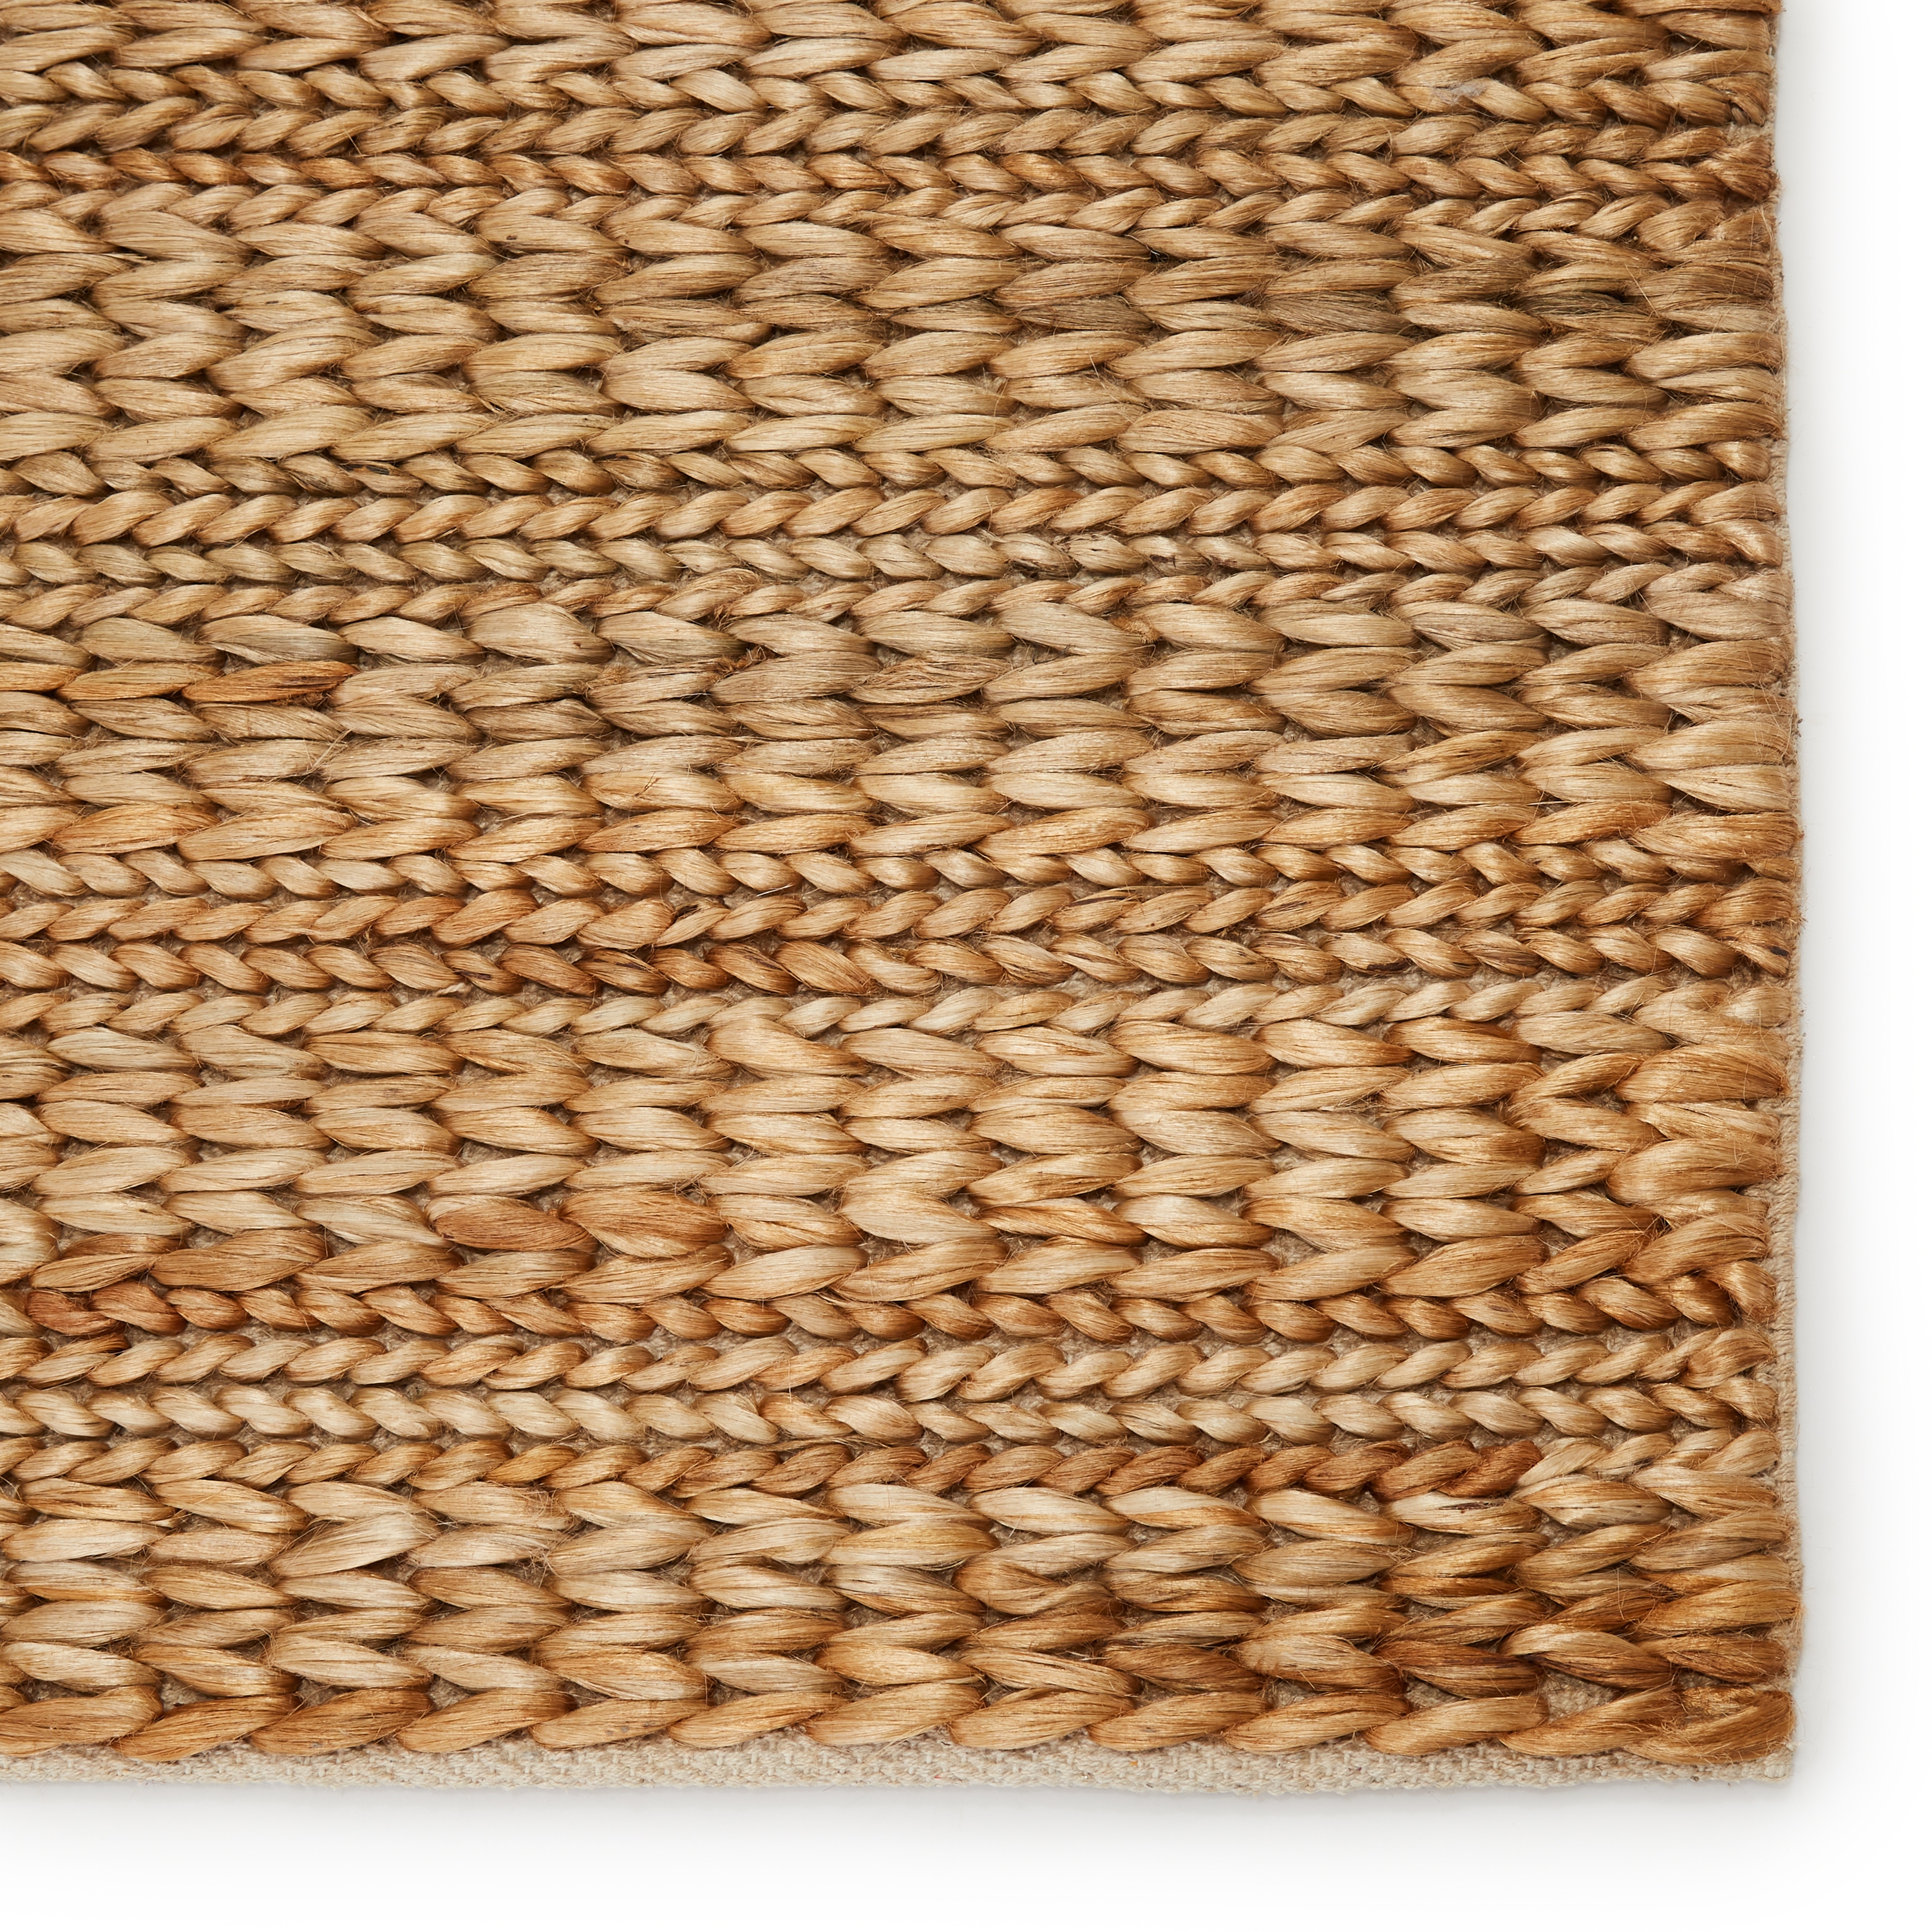 Poncy Natural Solid Tan Area Rug (8'X10') - Image 3